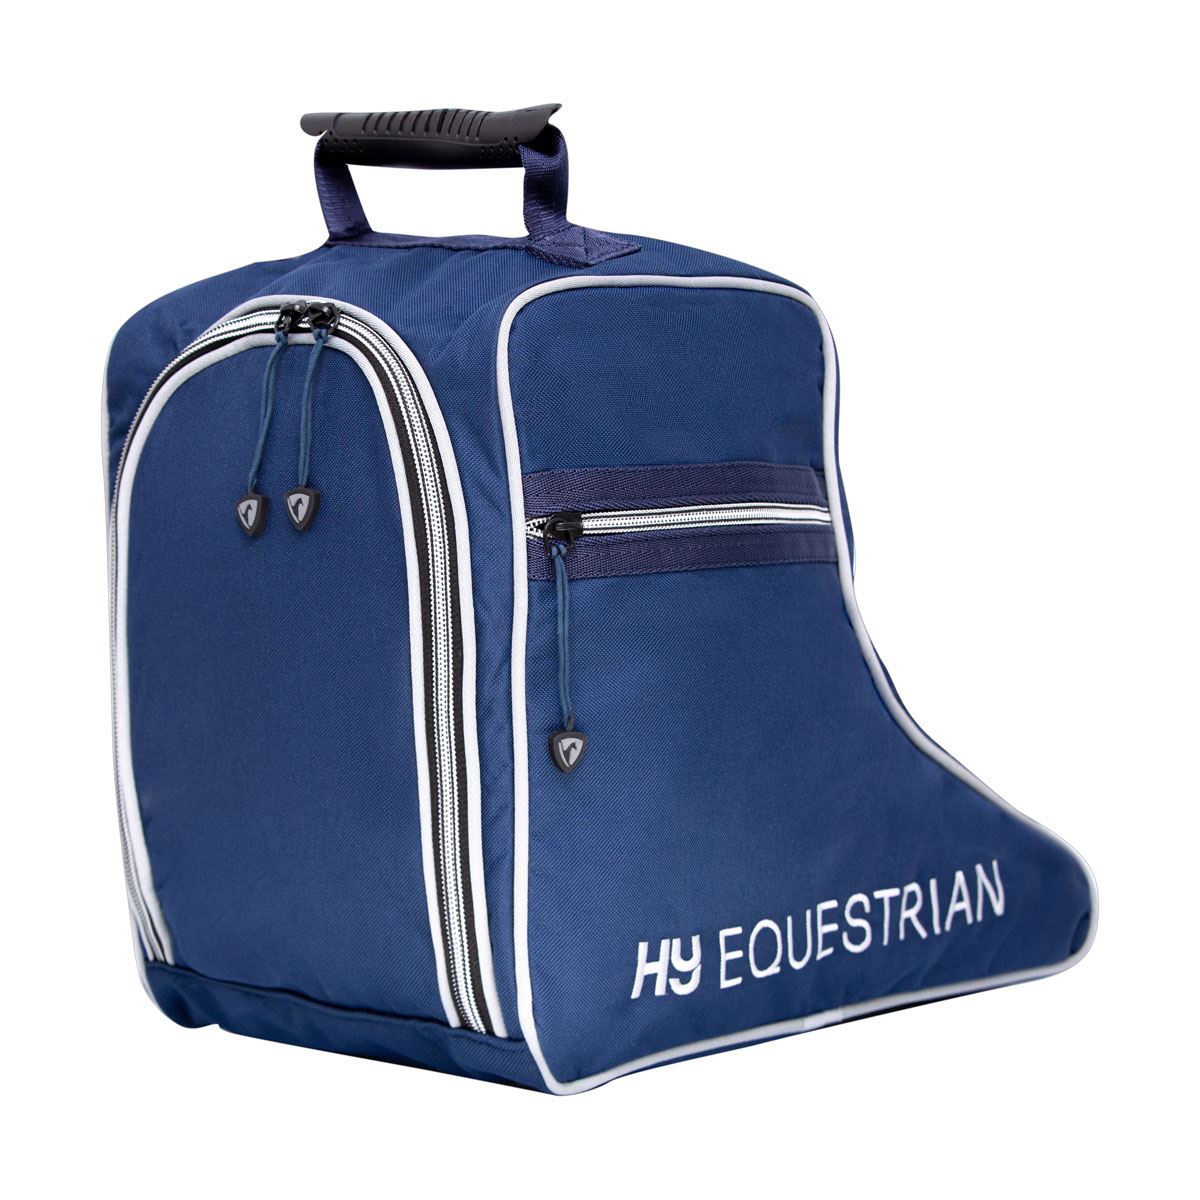 Hy Equestrian Jodhpur Boot Bag - Just Horse Riders